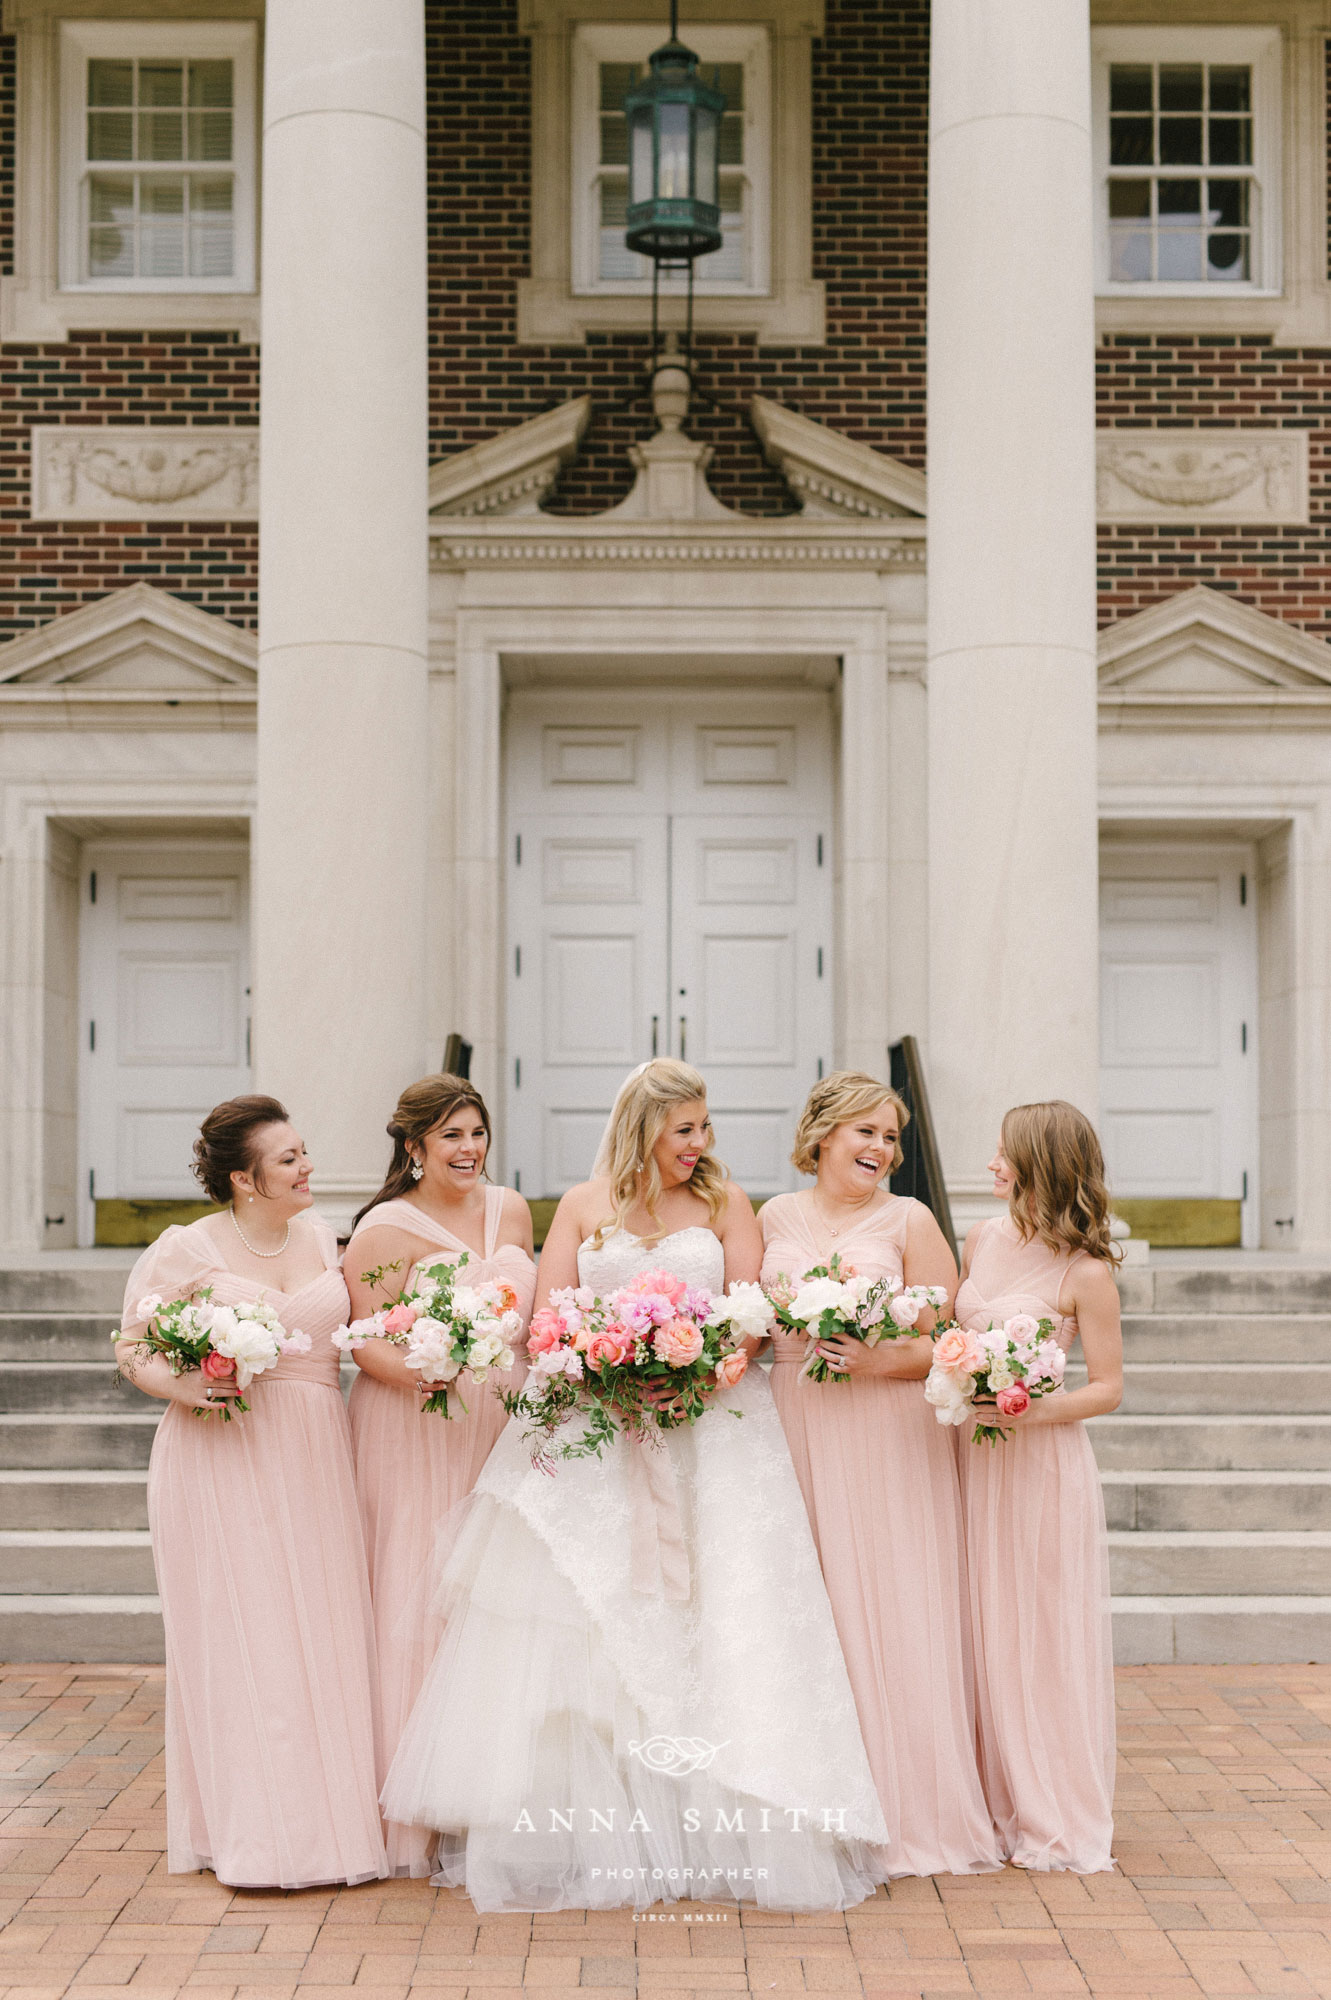 Perkins Chapel wedding with Blush bridesmaid Dresses